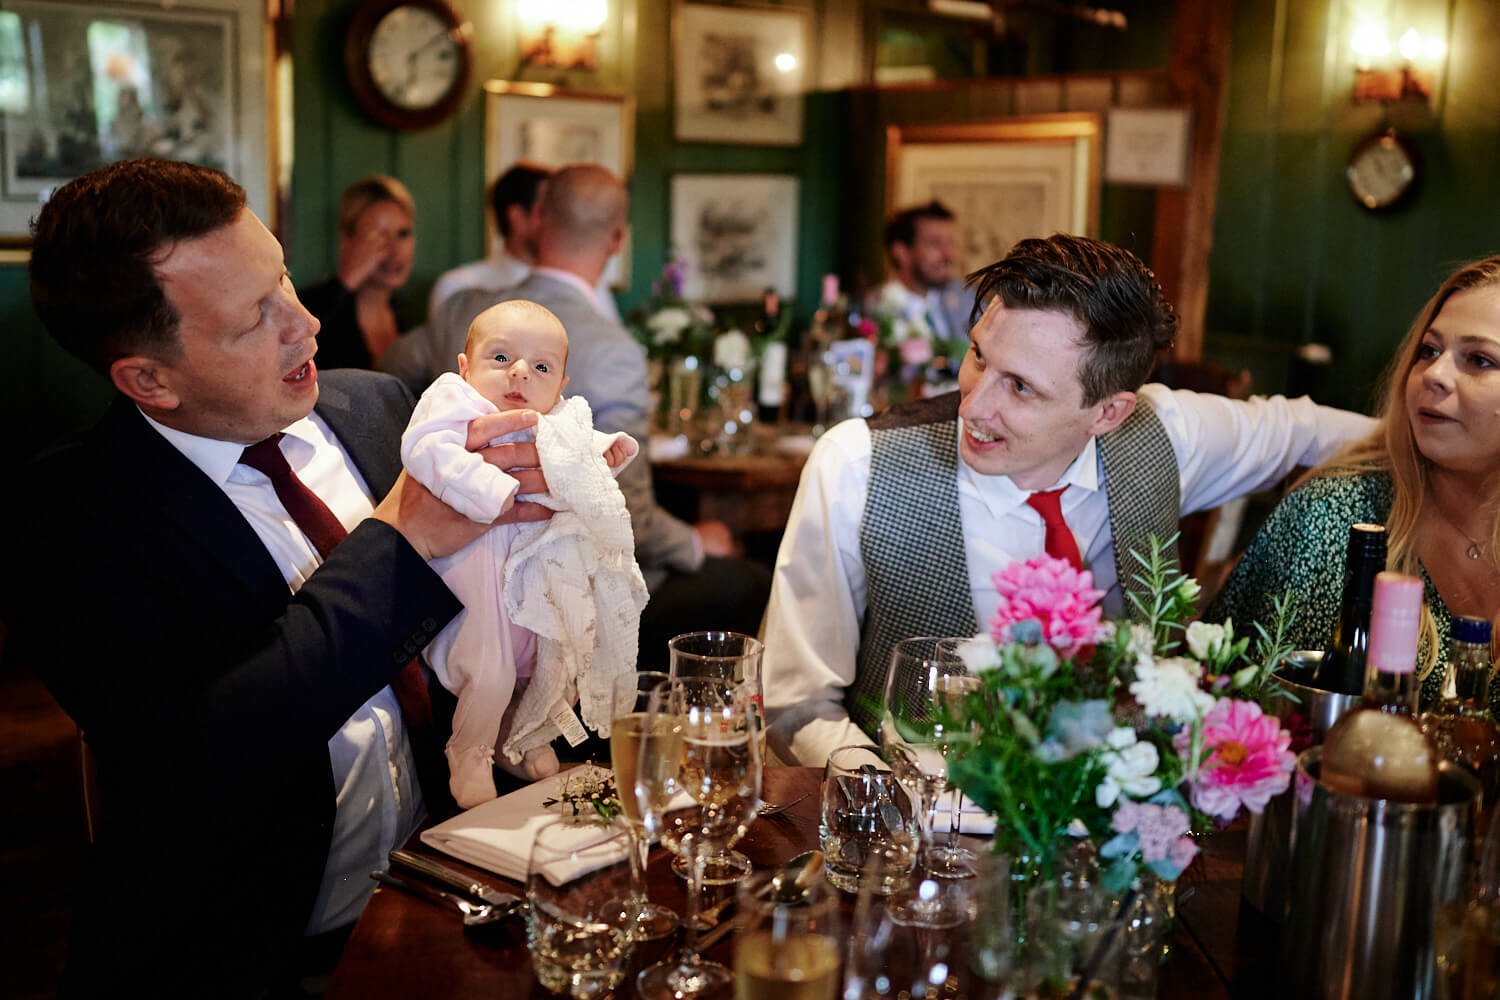 Wedding Photographer, Surrey | Leanne and Oli’s Farnham Wedding 29